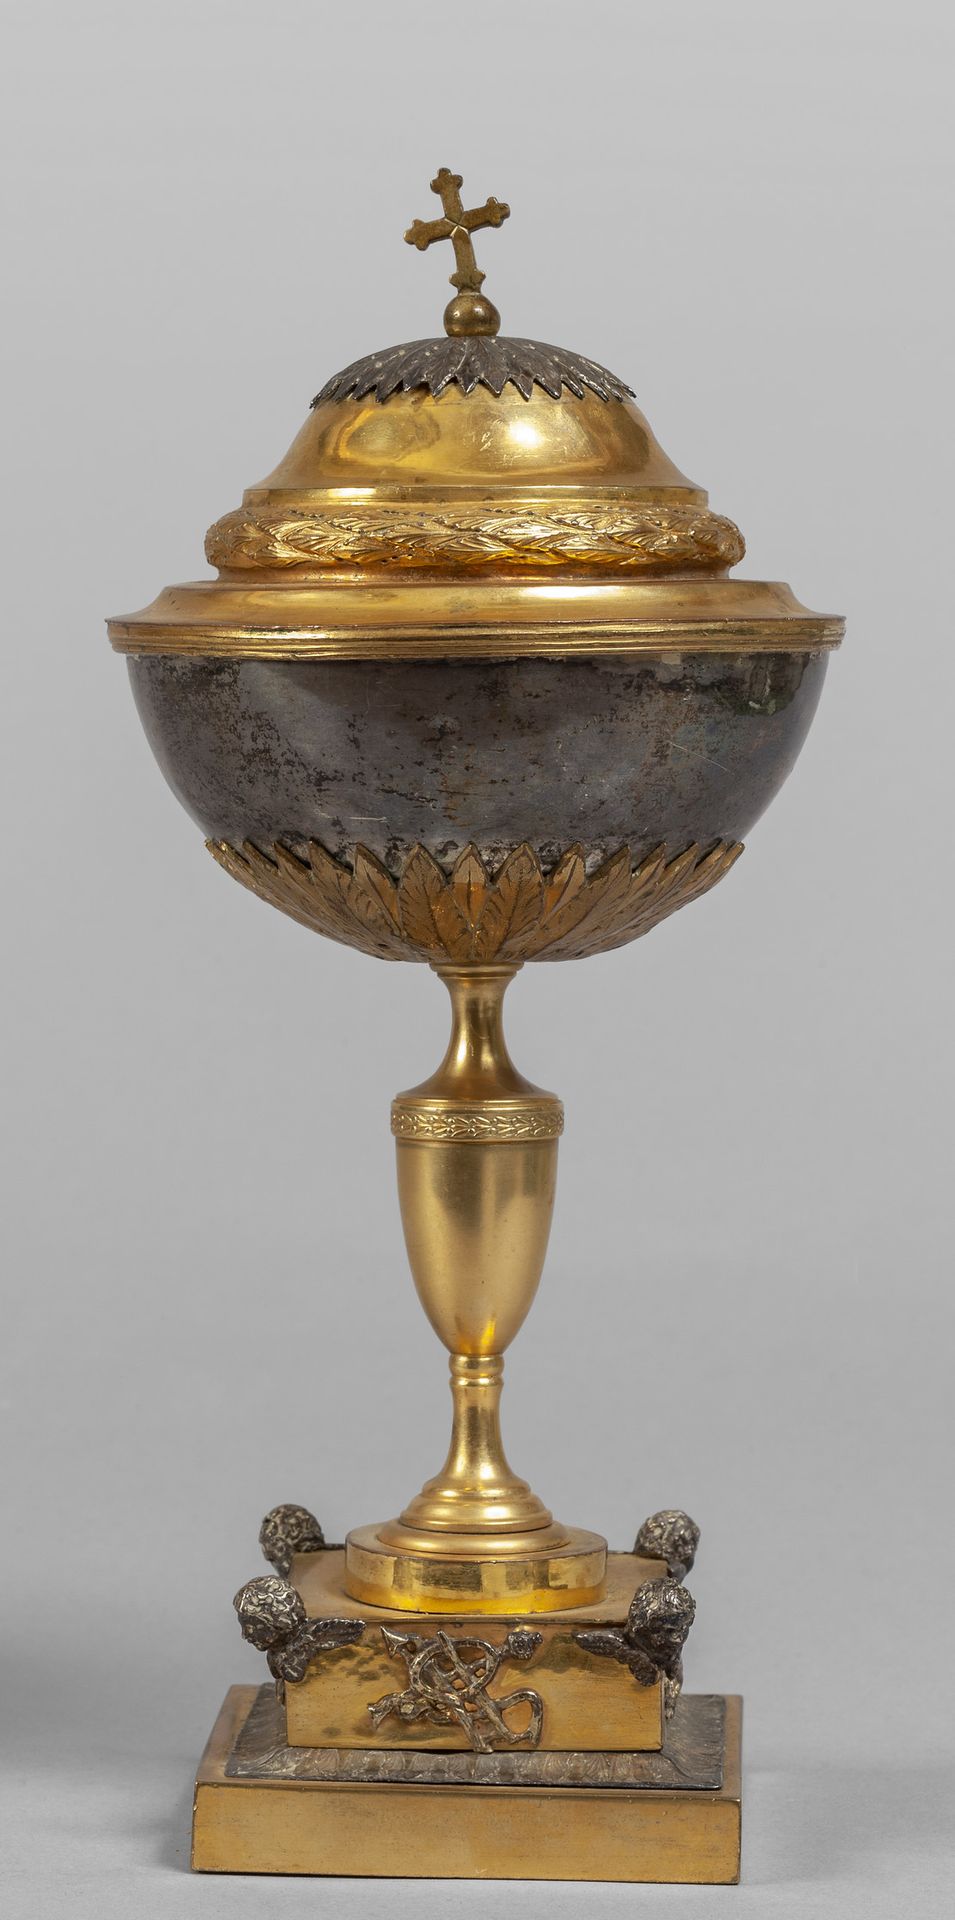 Pisside in bronzo dorato ed argento, sec. 镀金的青铜和银质圣杯，18世纪
，高28厘米。